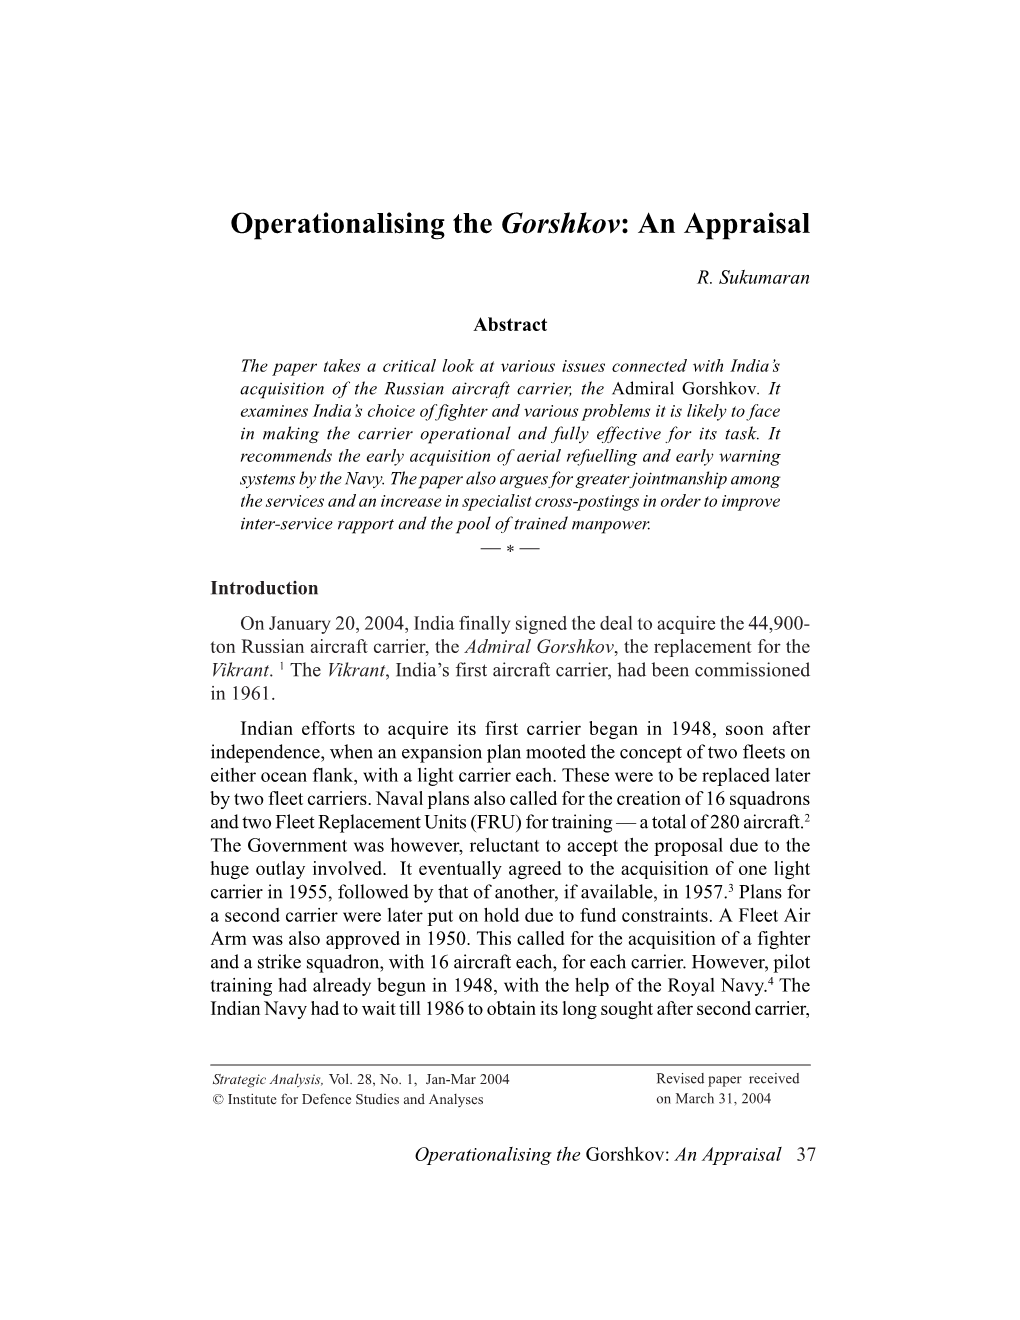 Operationalising the Gorshkov: an Appraisal